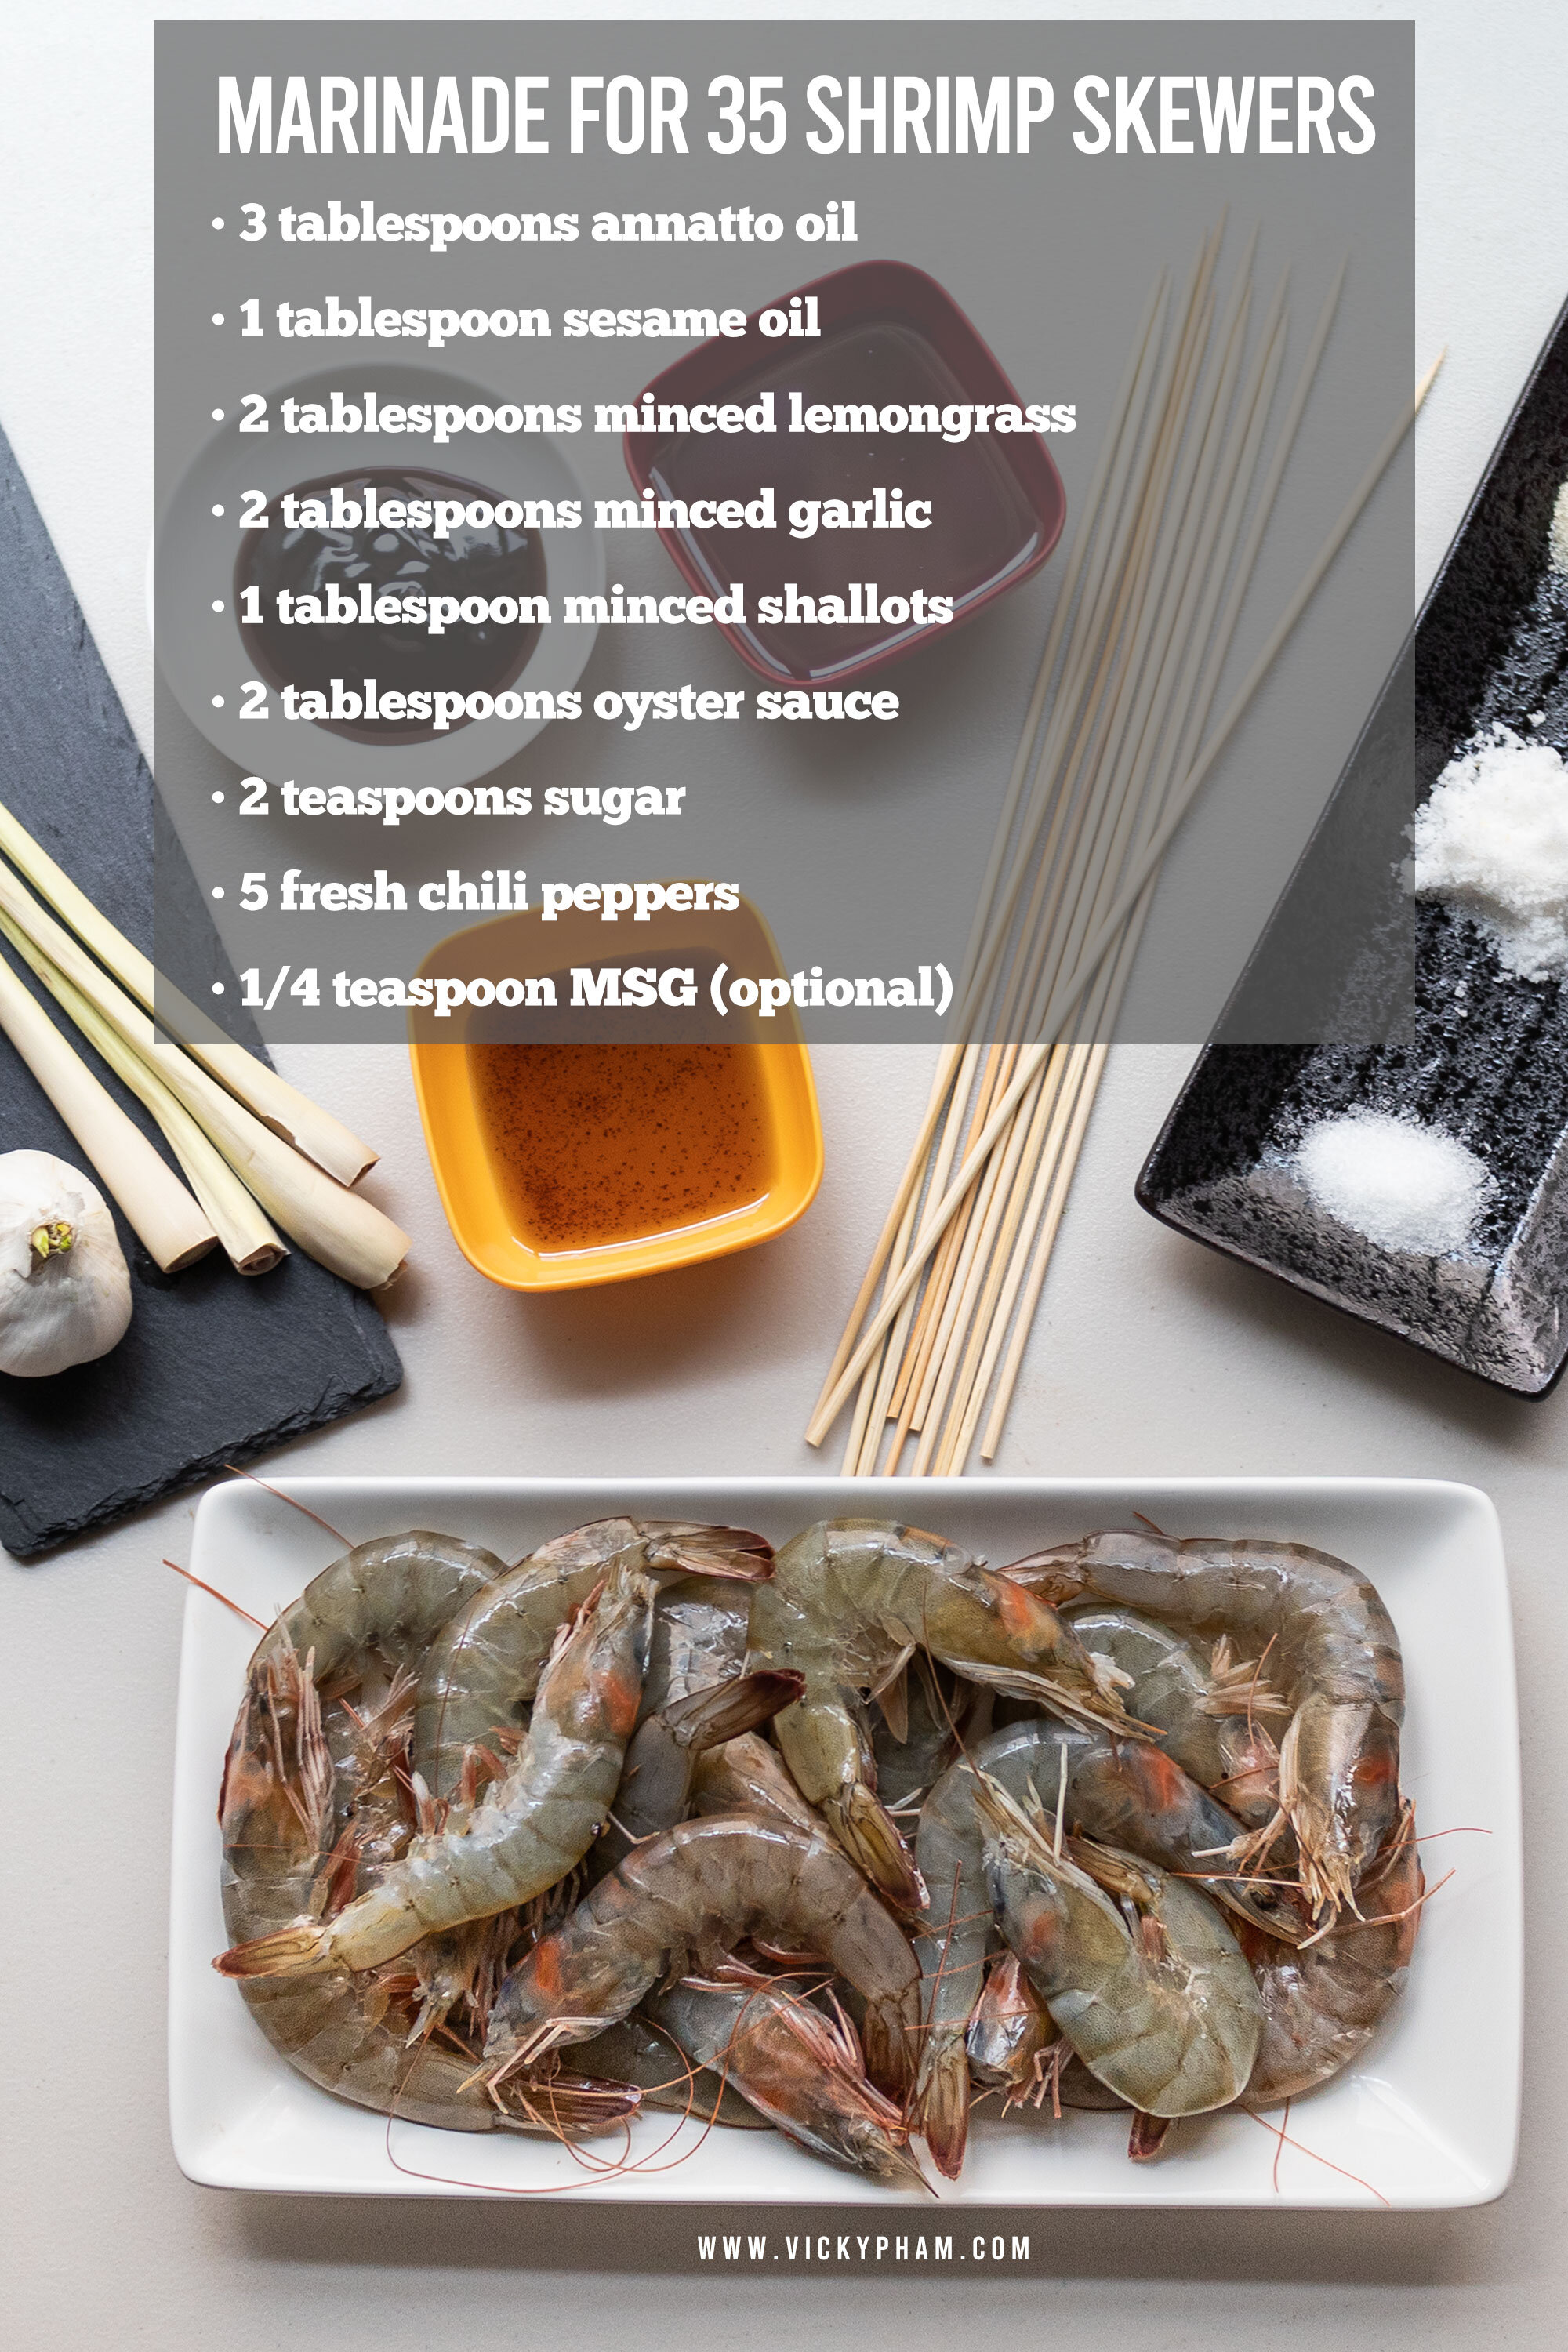 Lemongrass-Skewered Spicy Shrimp Recipe